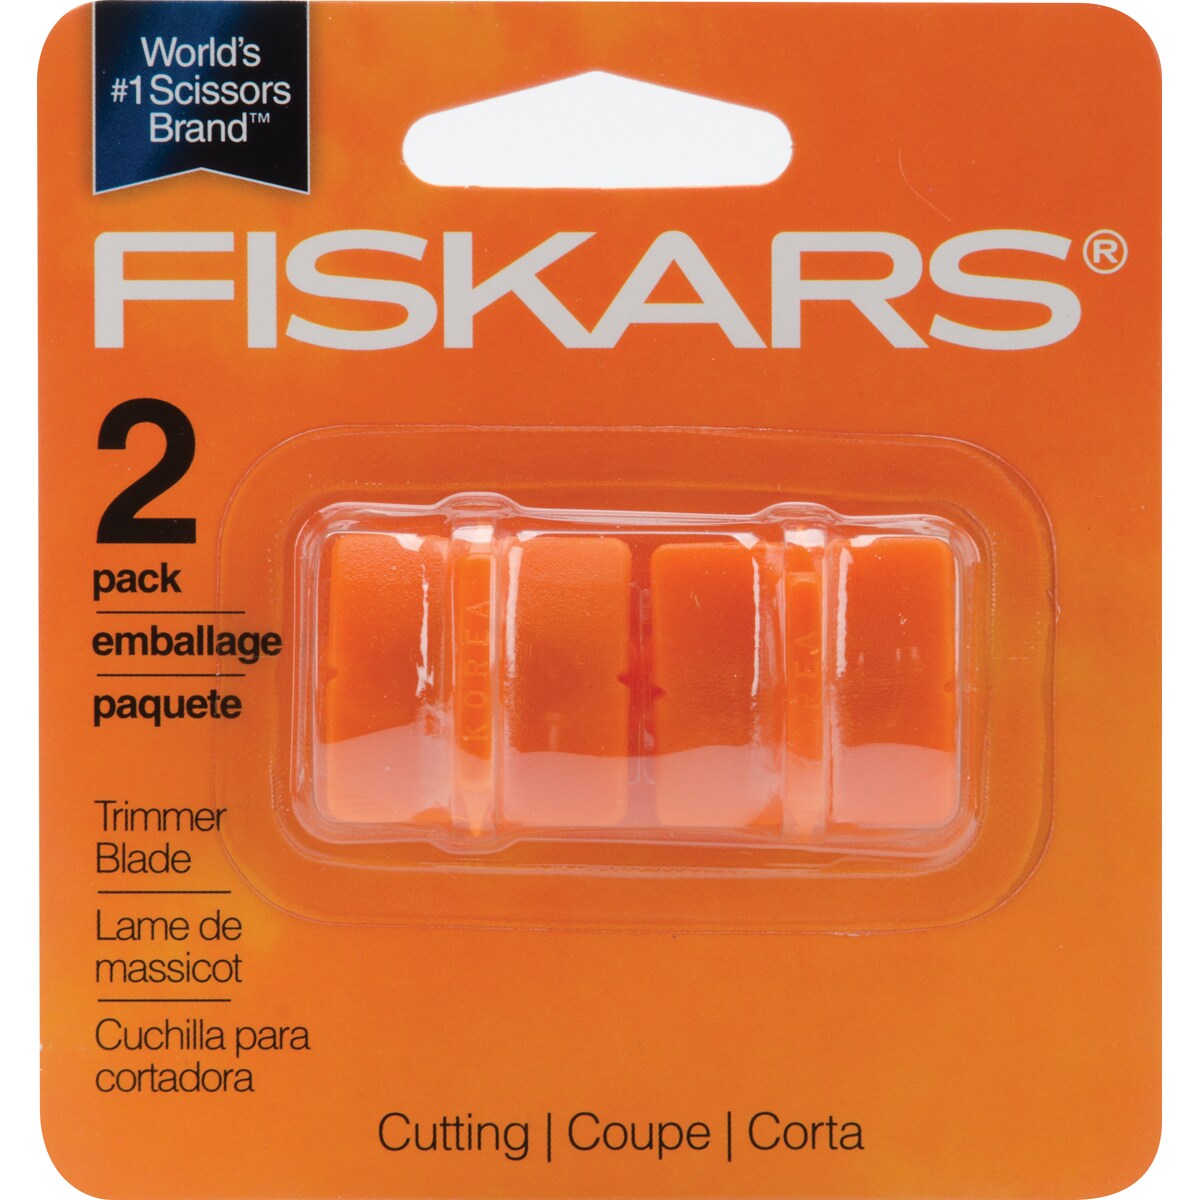 Shop Fiskars Fiskars Snap Knife with Replacement Blades at